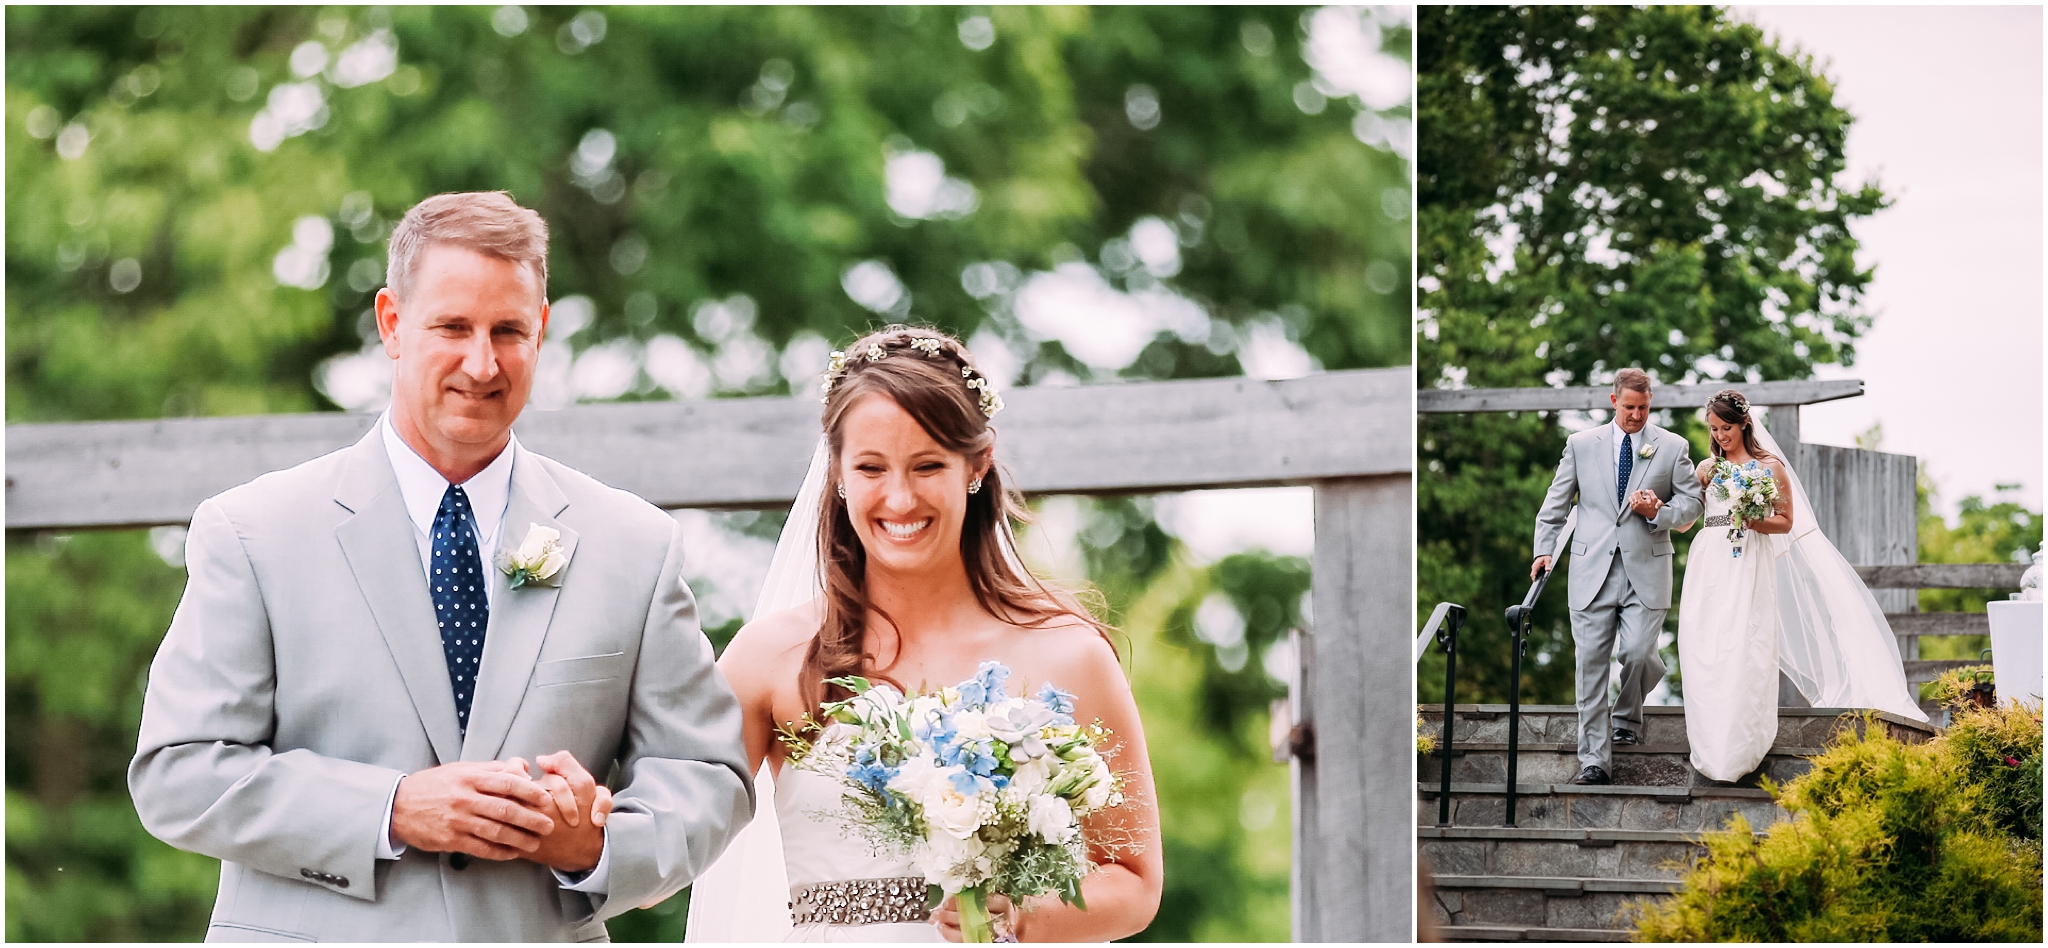 045-0719-170834-KatieandChris-Riverside on the Potomac Leesburg VA Wedding Photographer.jpg